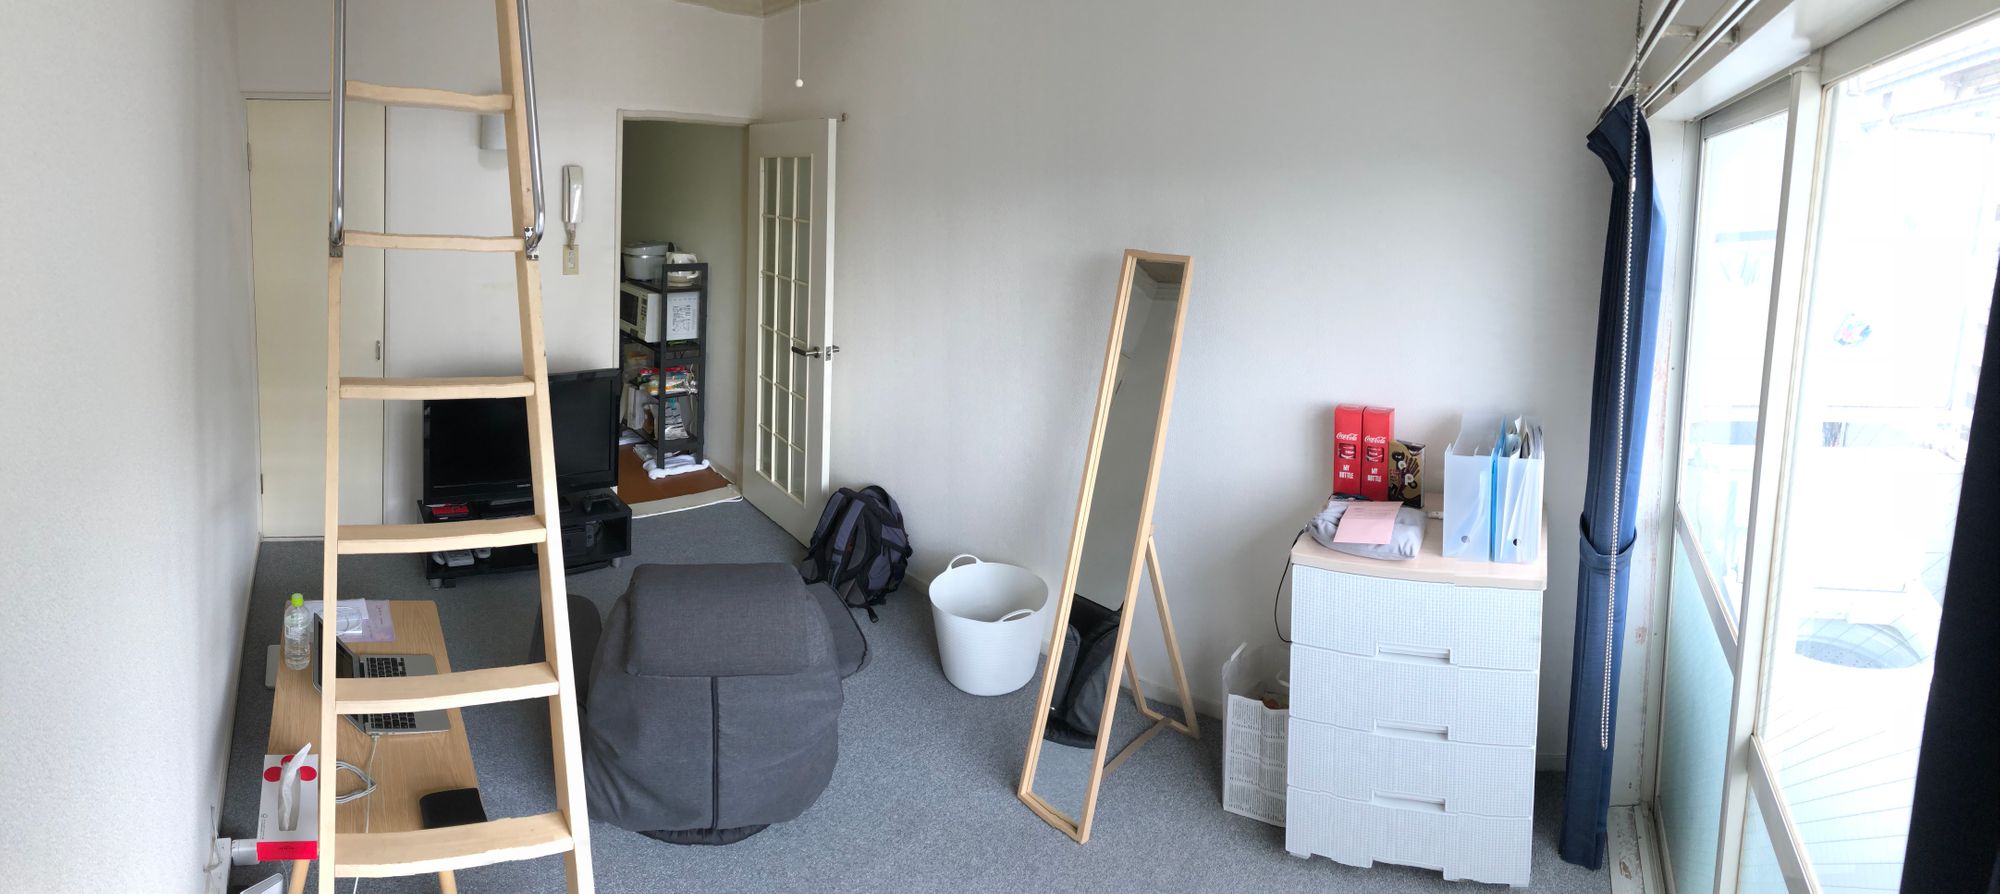 Gallery: 私のアパート (my apartment)